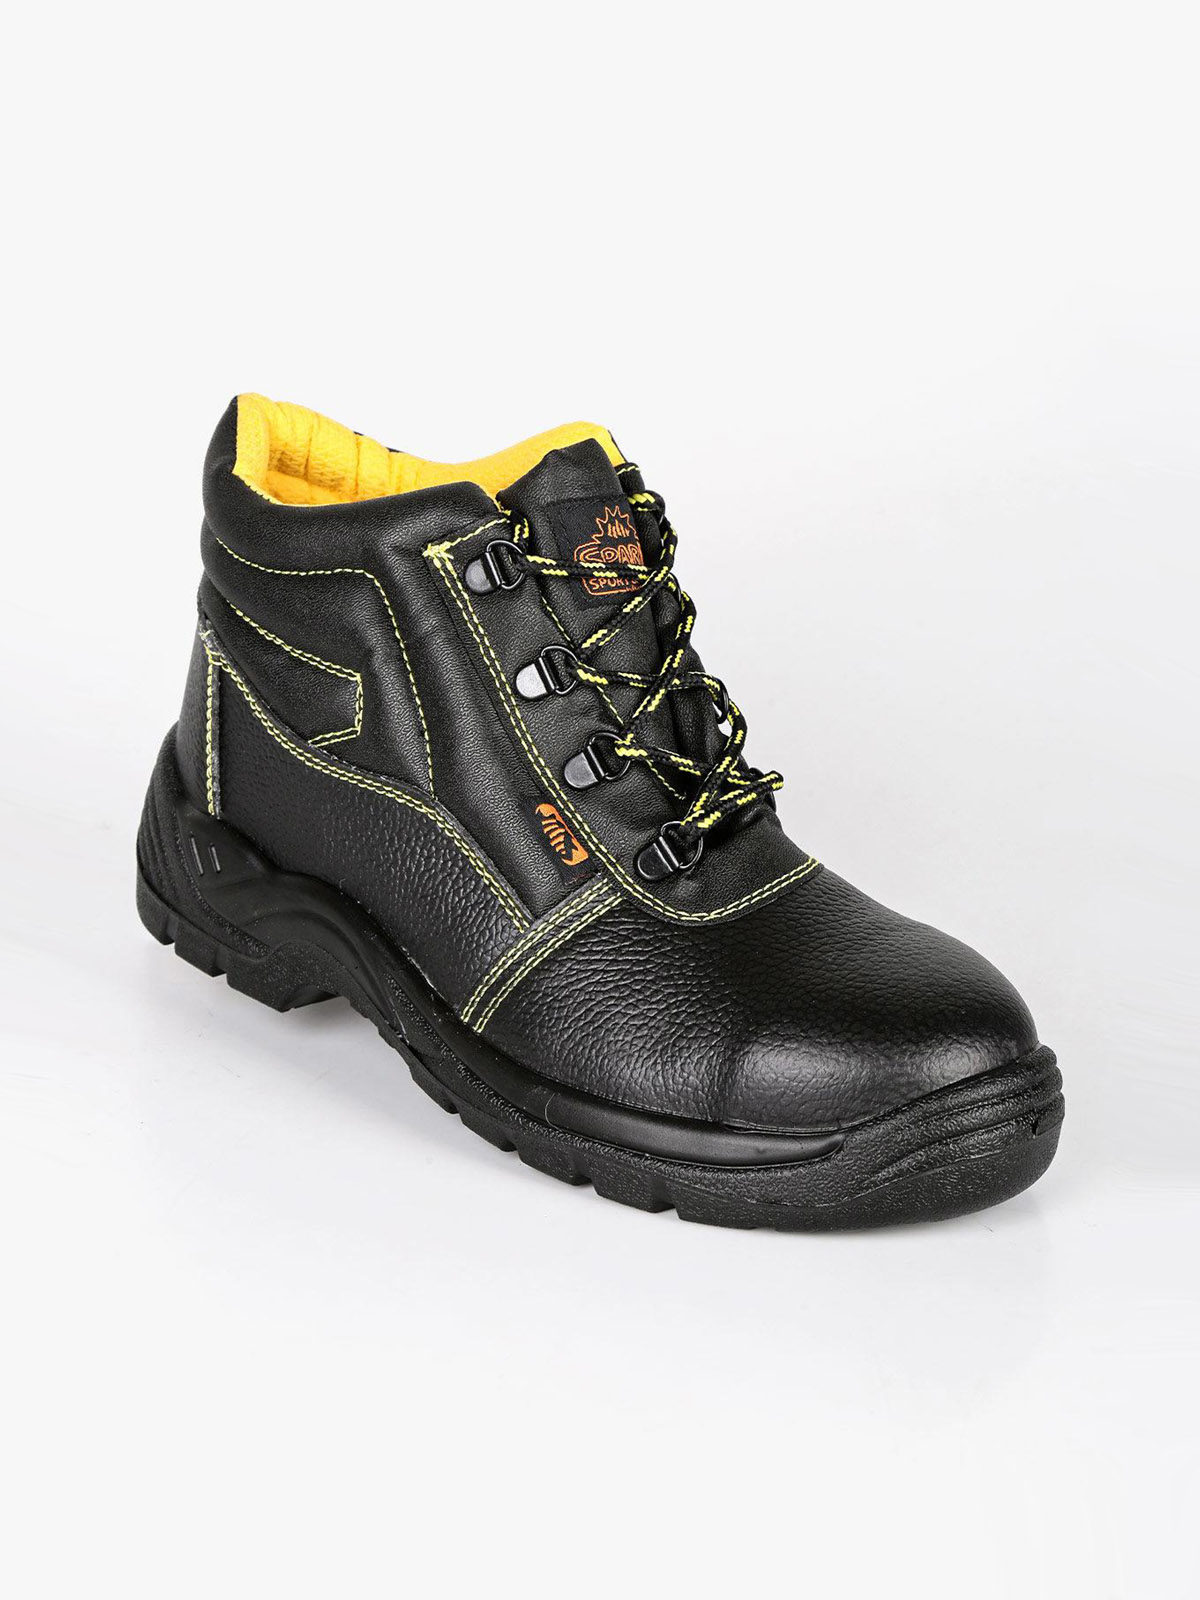 CAT P89955 Argon Black Composite Safety Toe Work Shoe